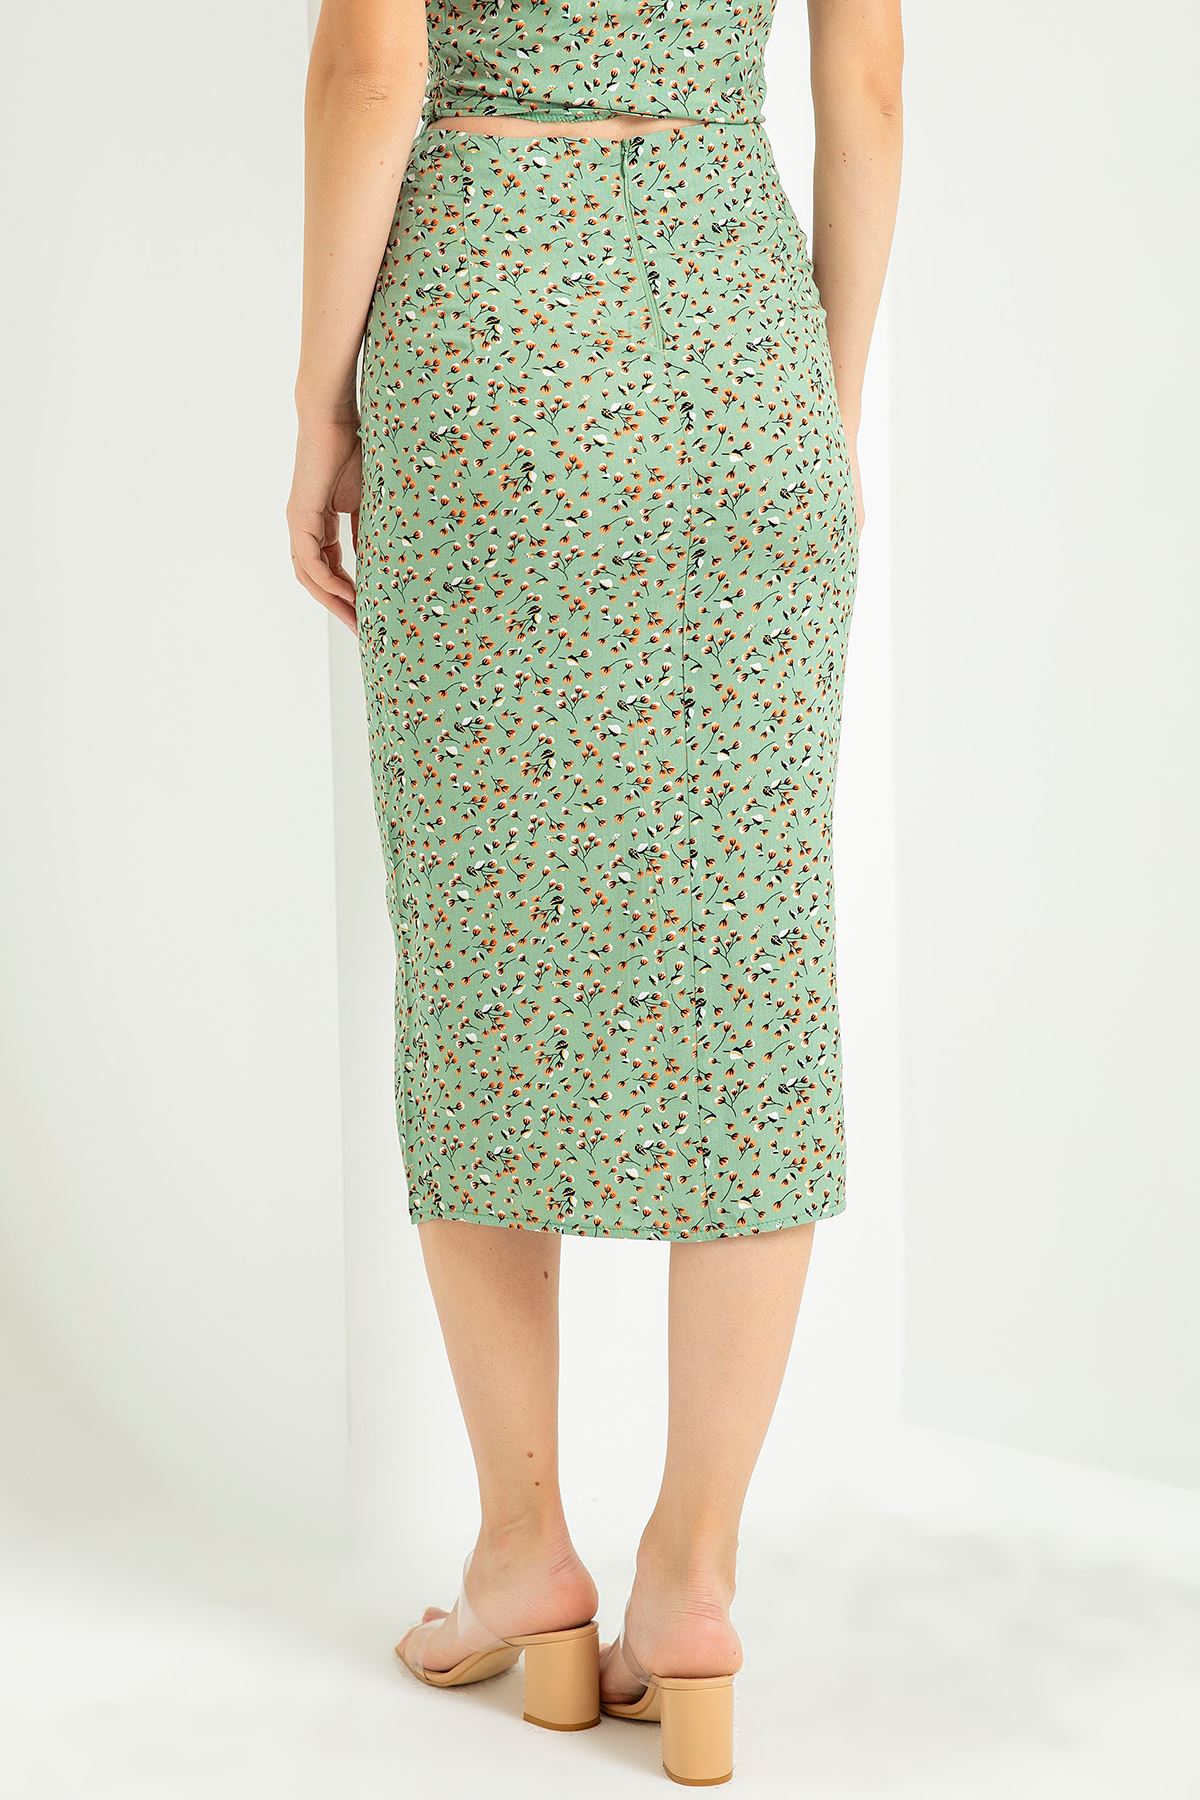 Below Knee Straight Crispy Floral Print Shirred Women'S Skirt - Mint